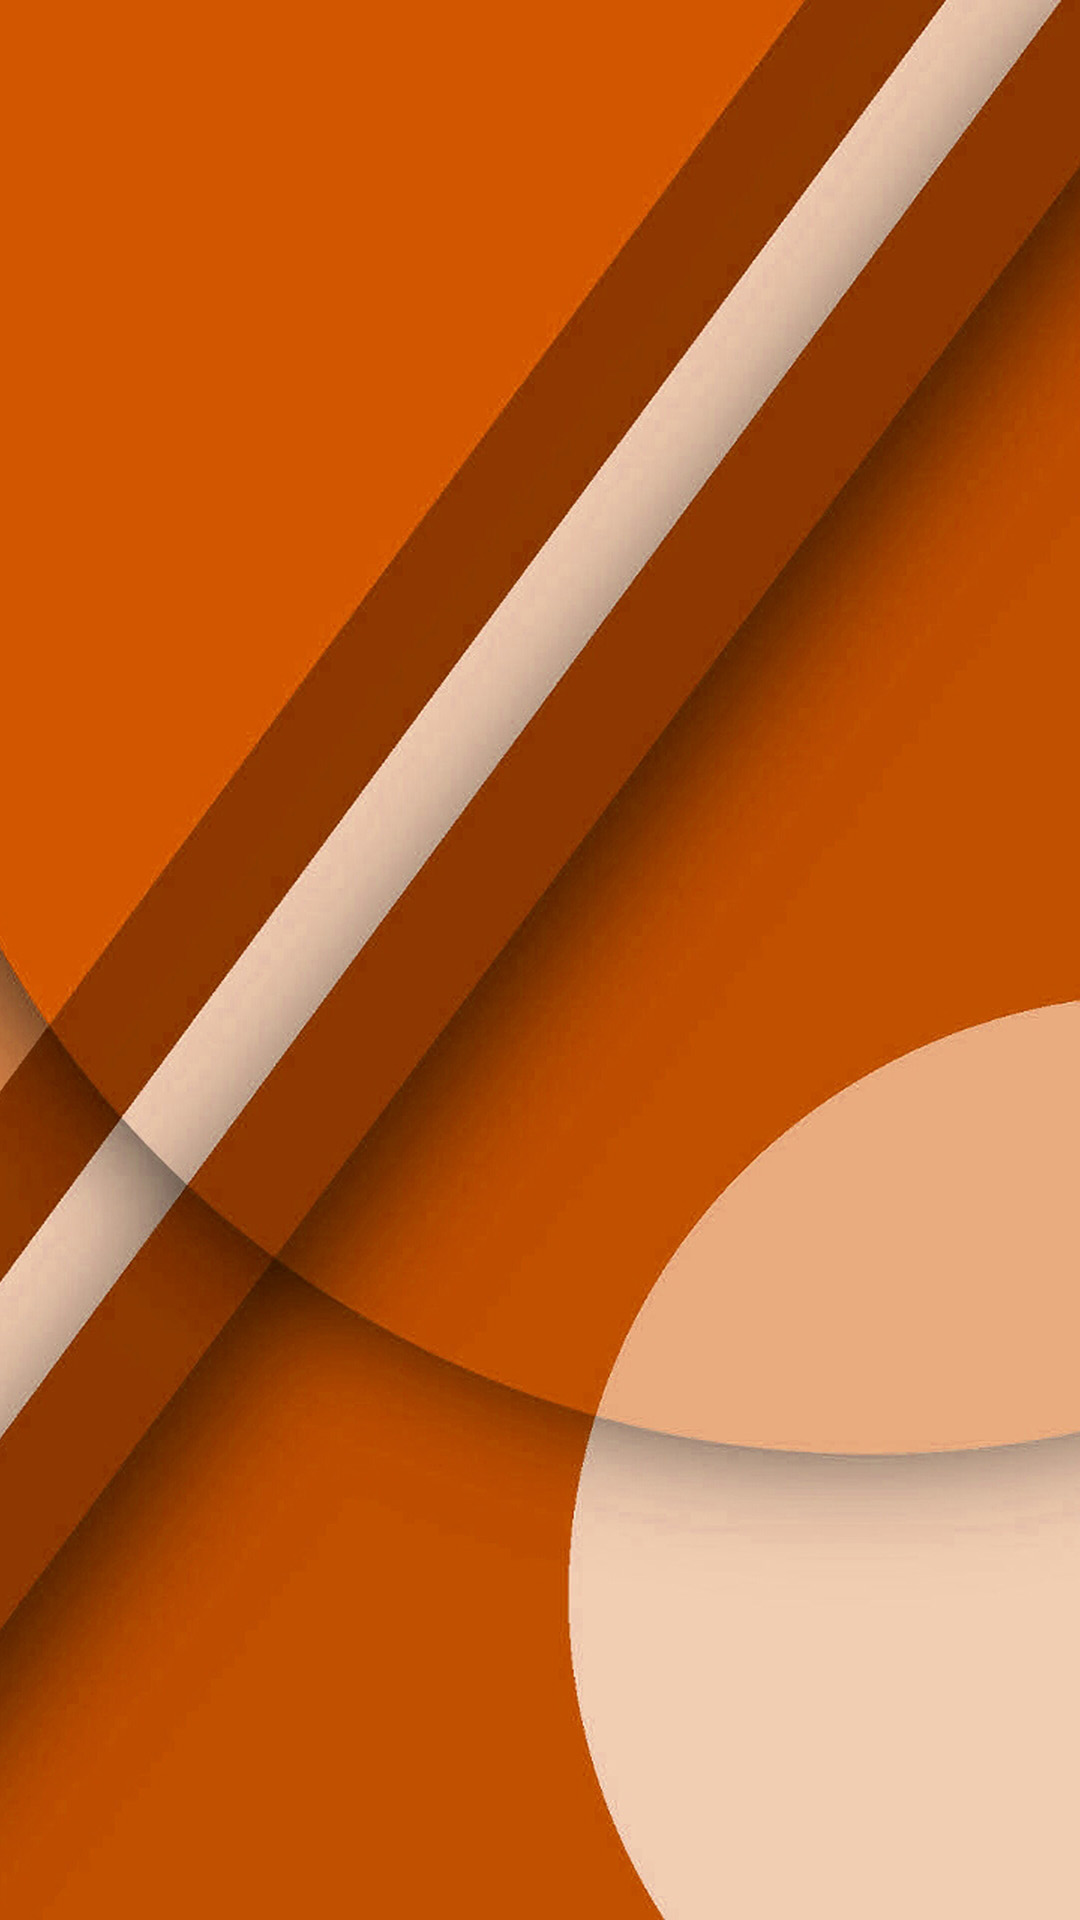 Free download orange geometric iphone 6 plus wallpaper iPhone 6